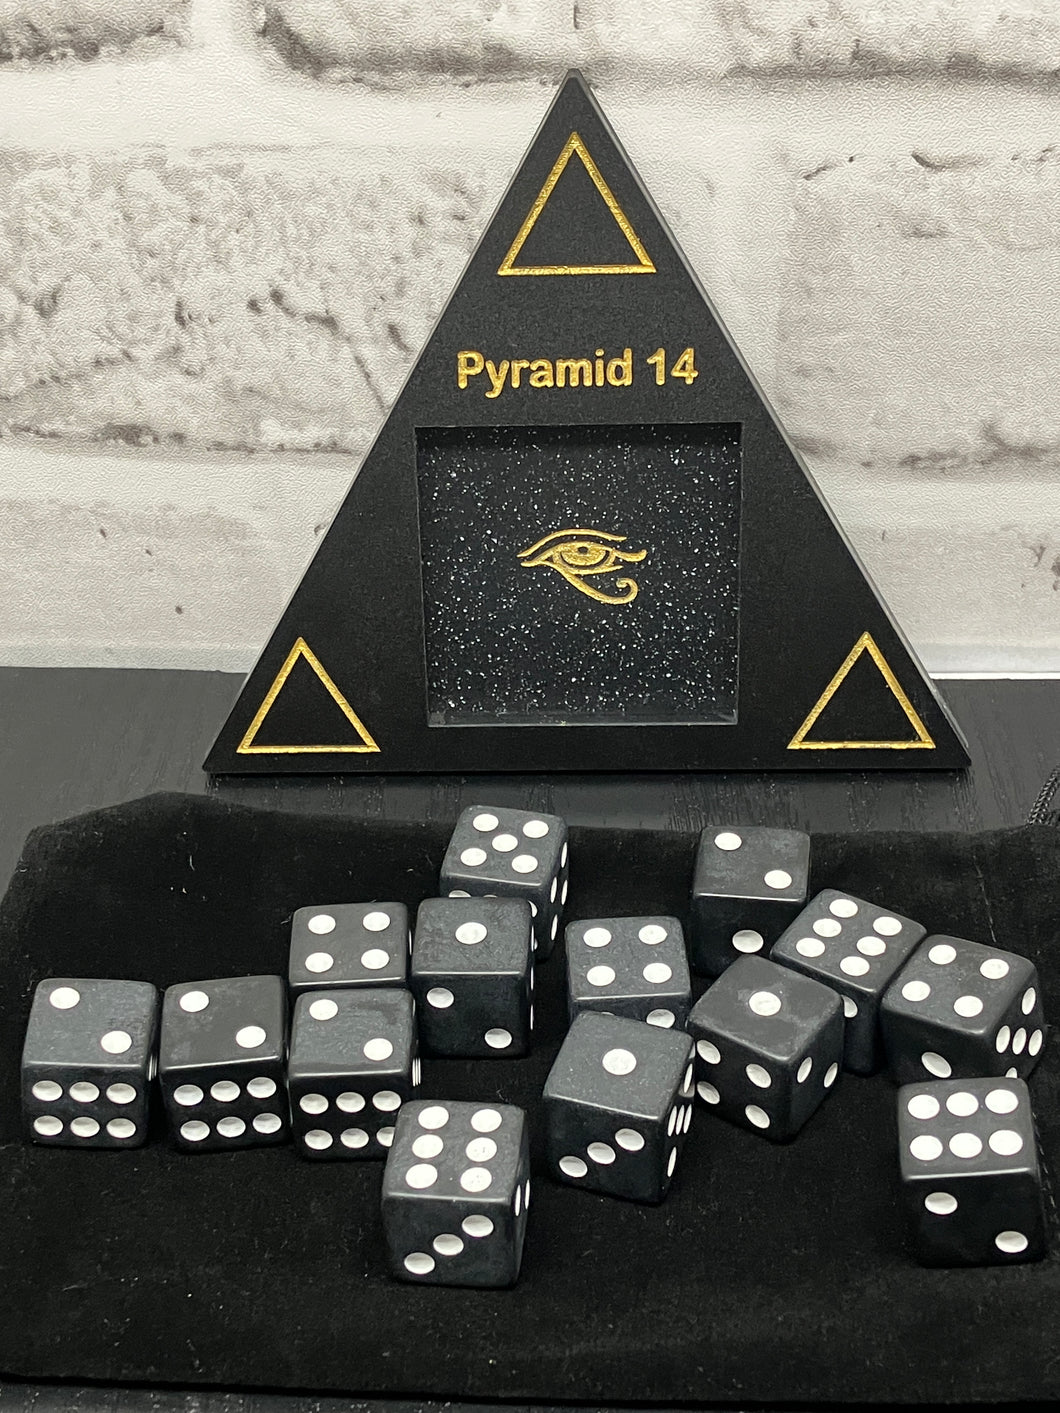 Pyramid14 - DICE GAME